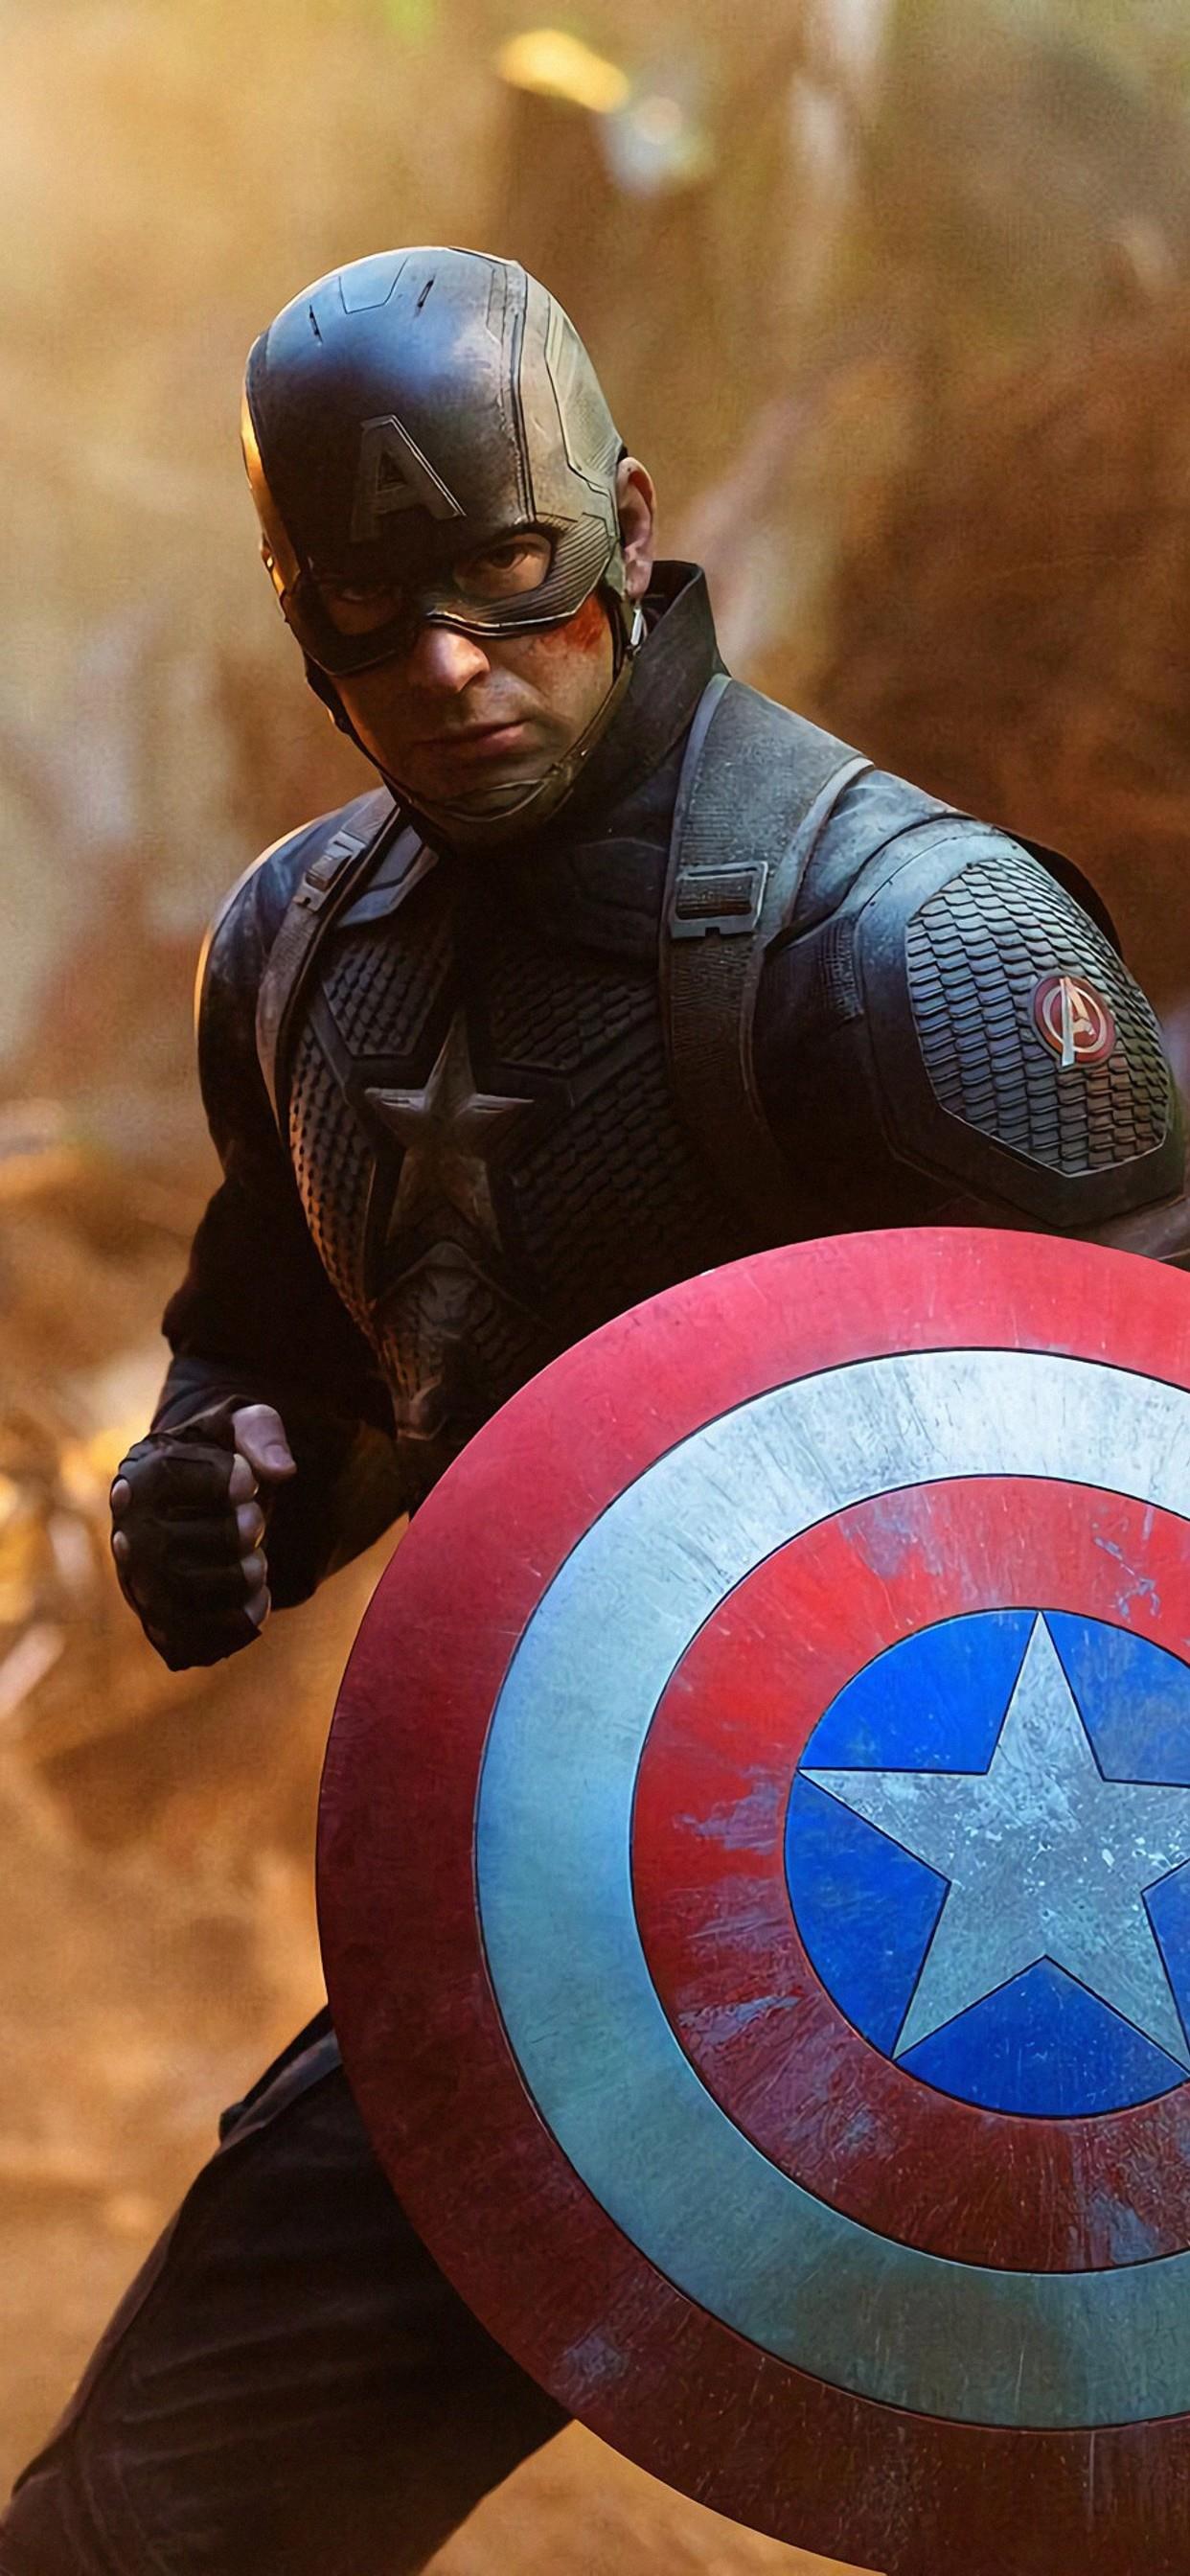 captain america avengers endgame movie iPhone X Wallpaper Free Download